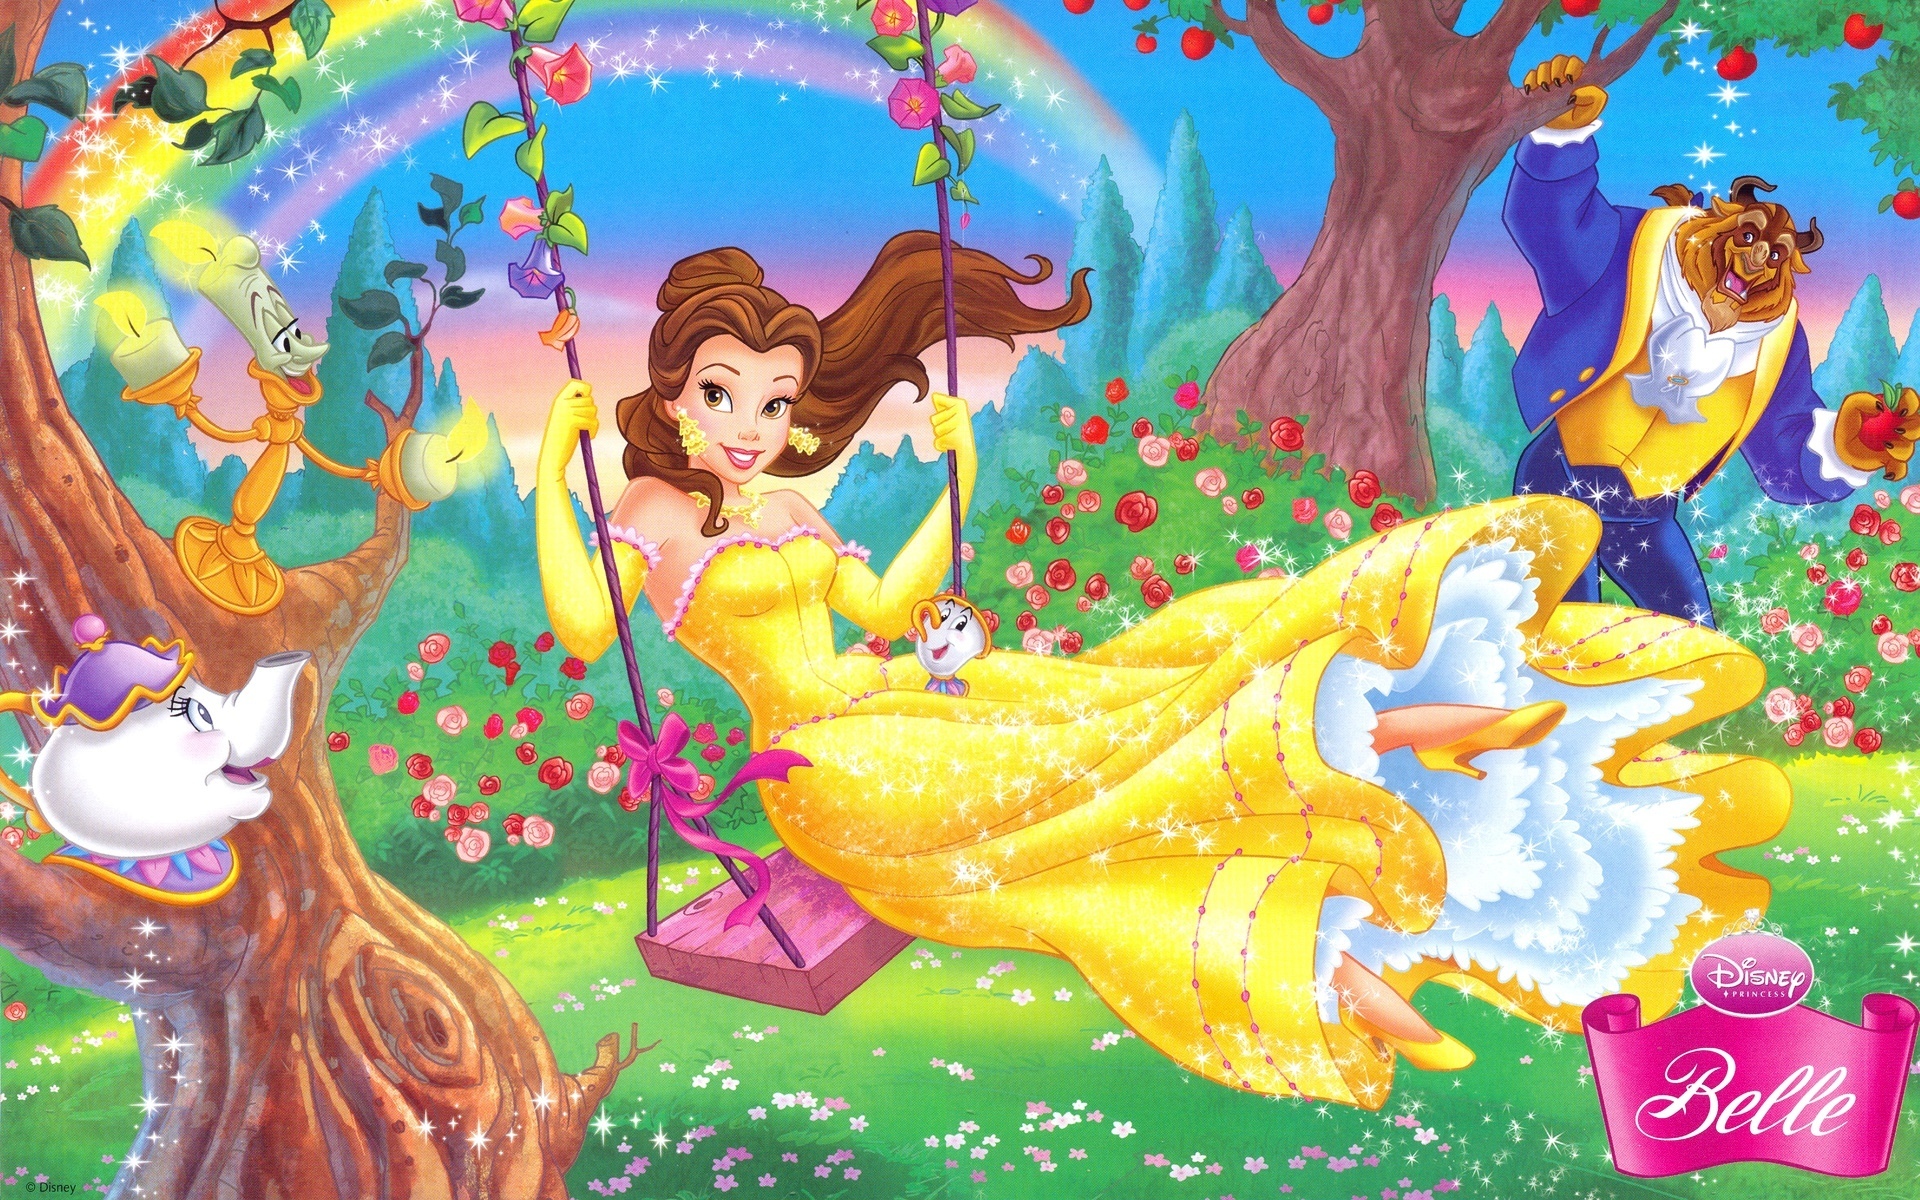 Belle and Beast  Disney Couples Wallpaper 7359497  Fanpop